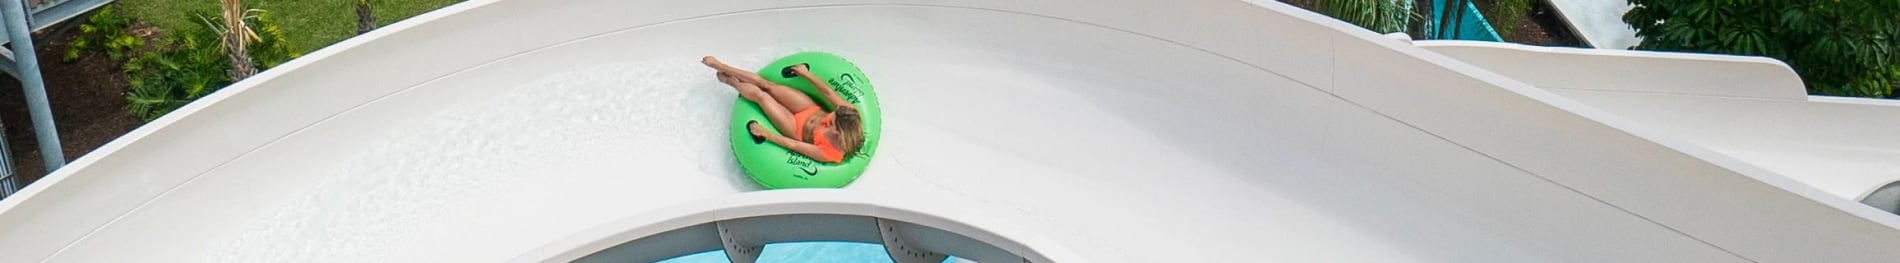 Calypso Coaster at Adventure Island Tampa Bay.